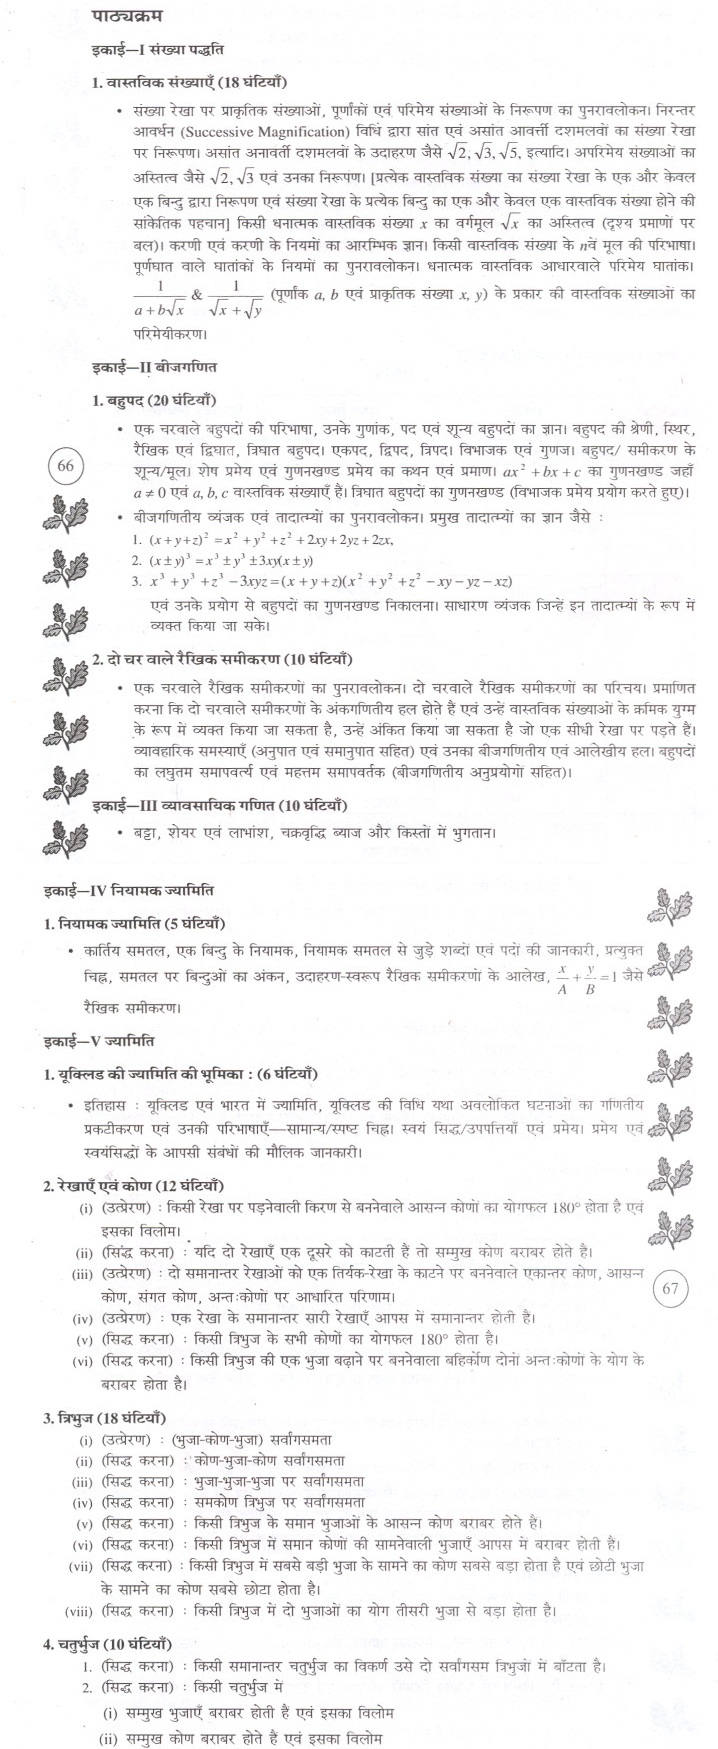 BSEB Syllabus For Class 9 10 Maths Bihar Board Syllabus Mathematics PDF Download